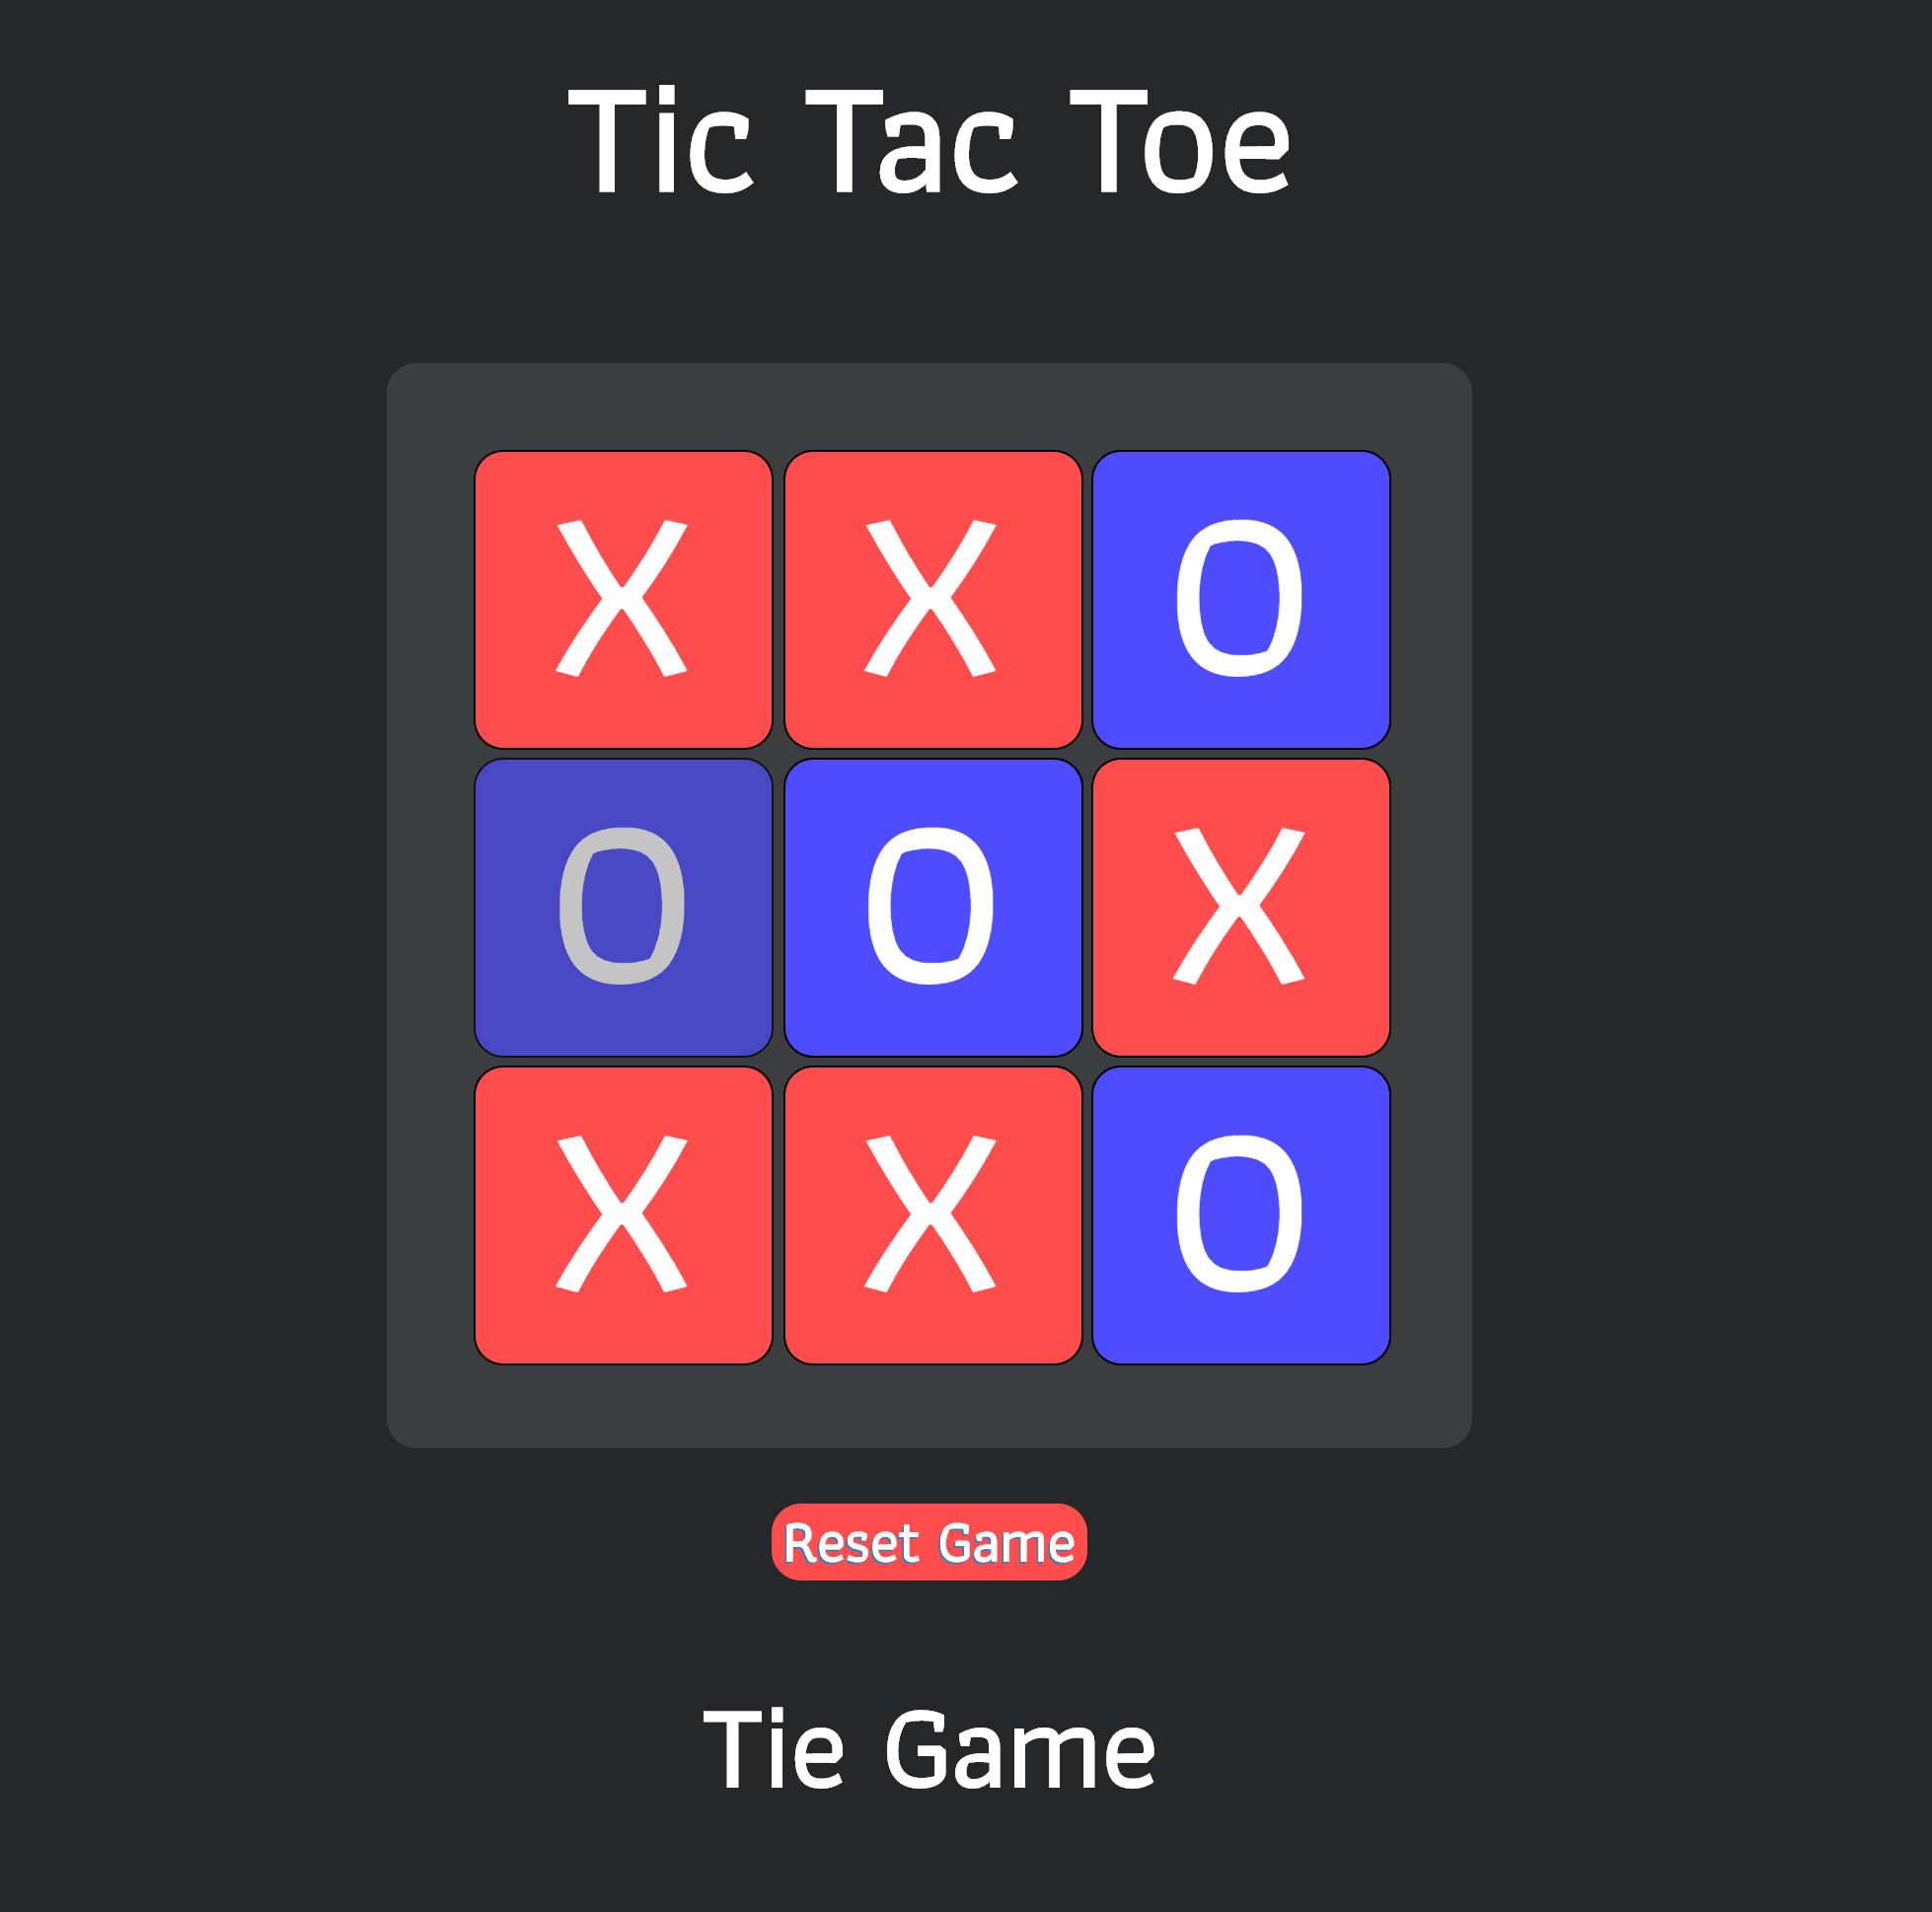 A tic tac toe game